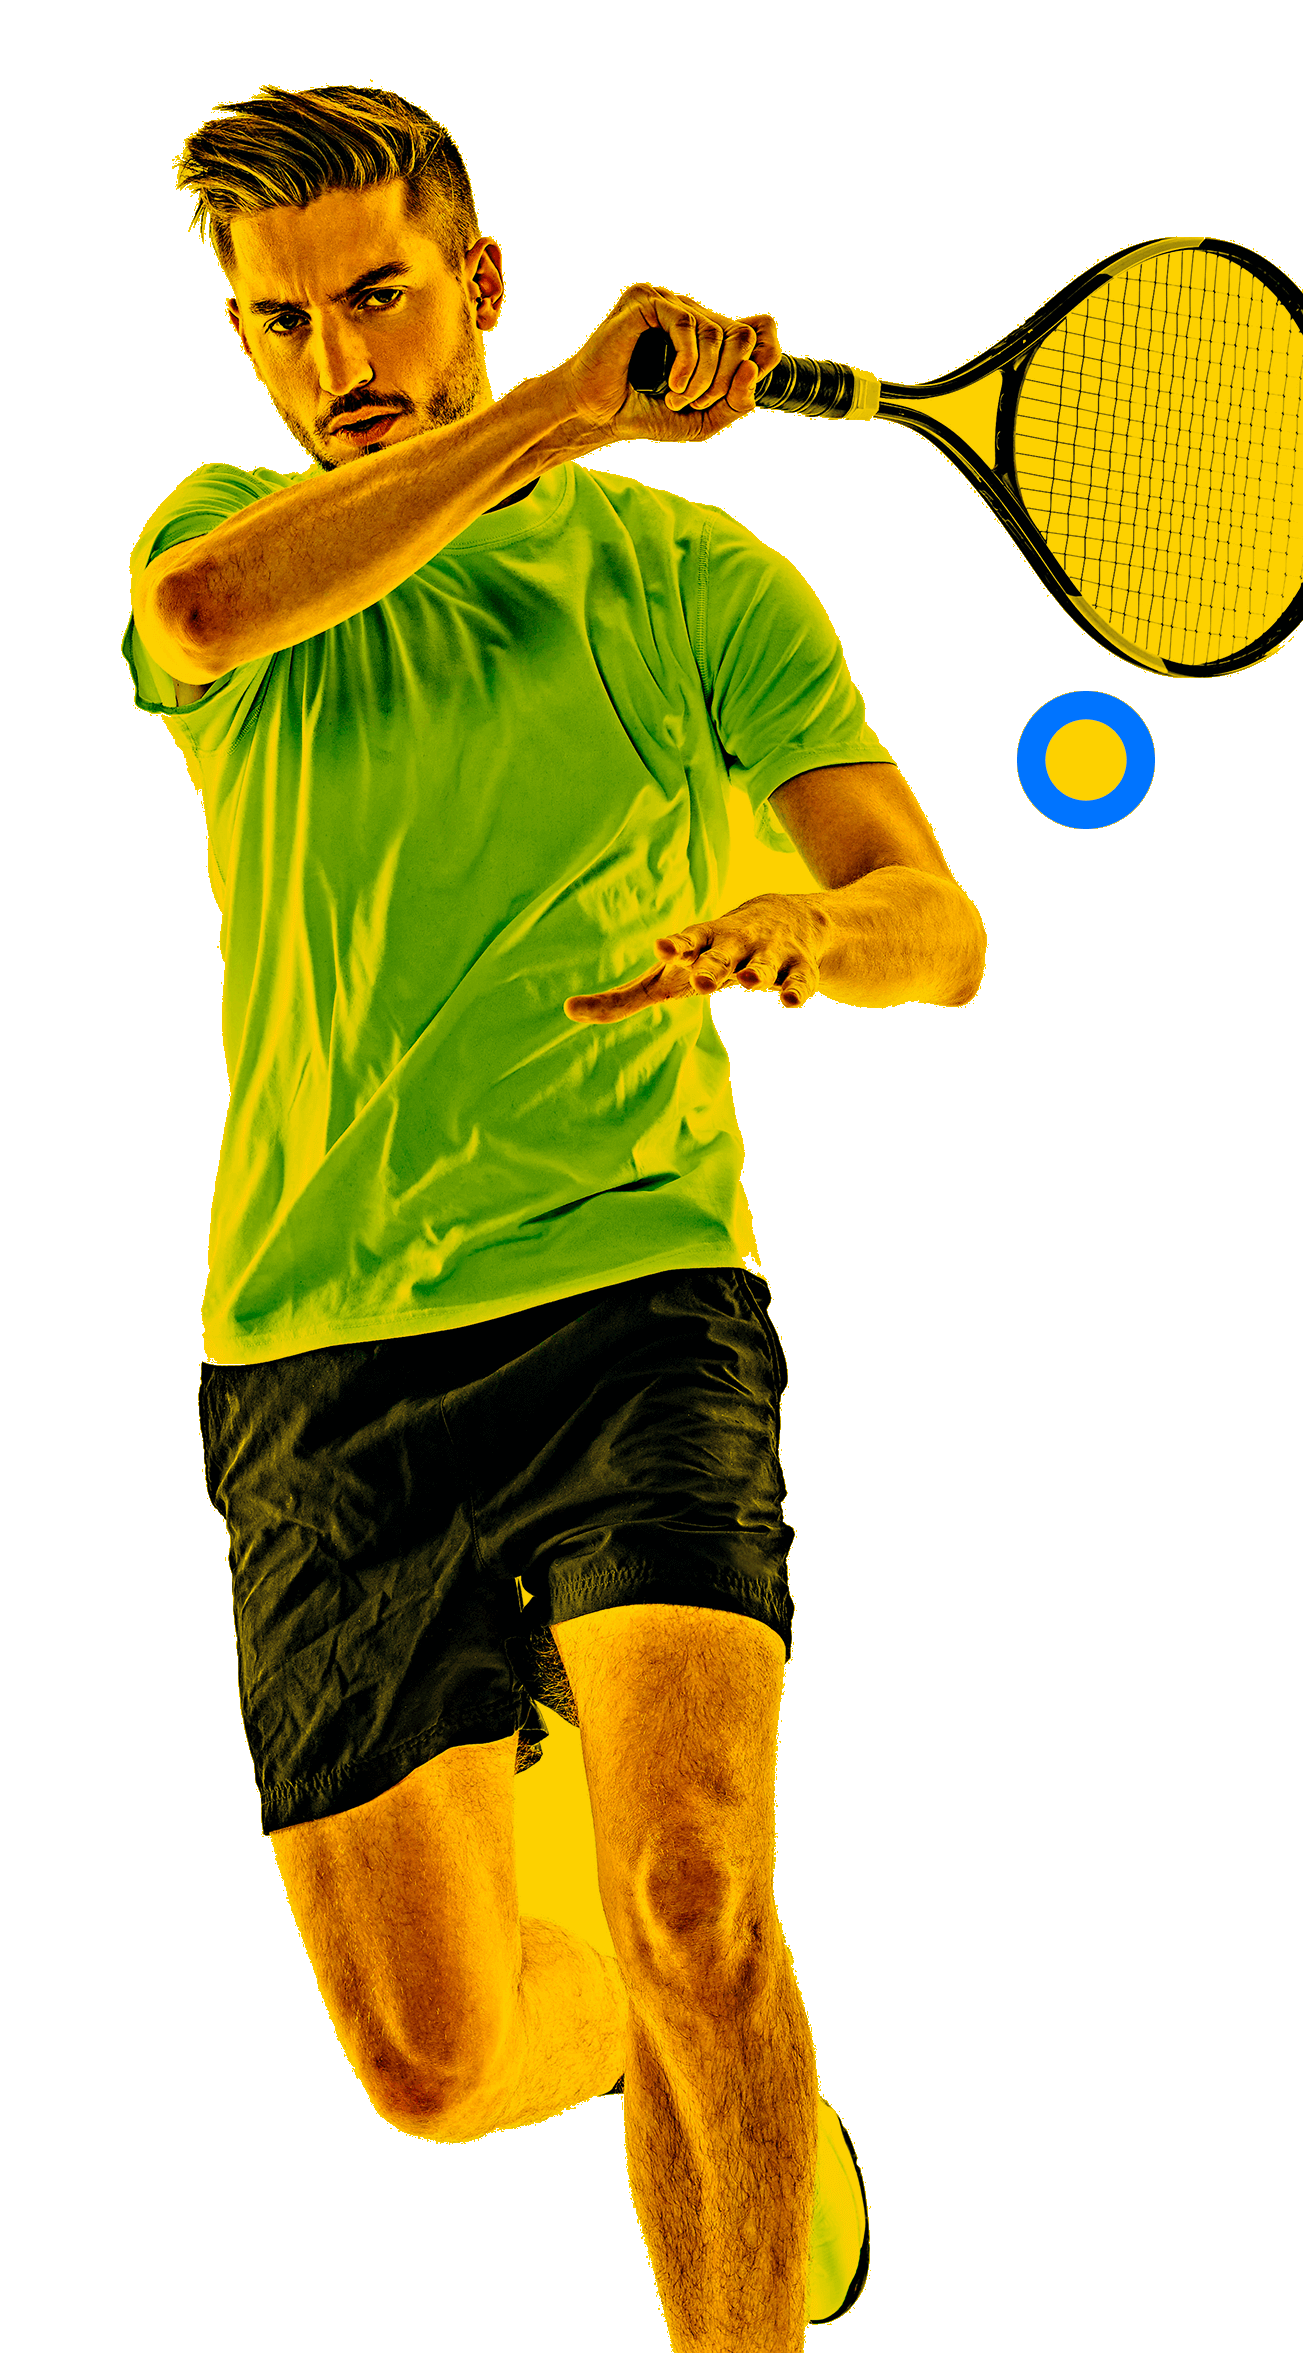 En la foto, un tenista golpeando la pelota.